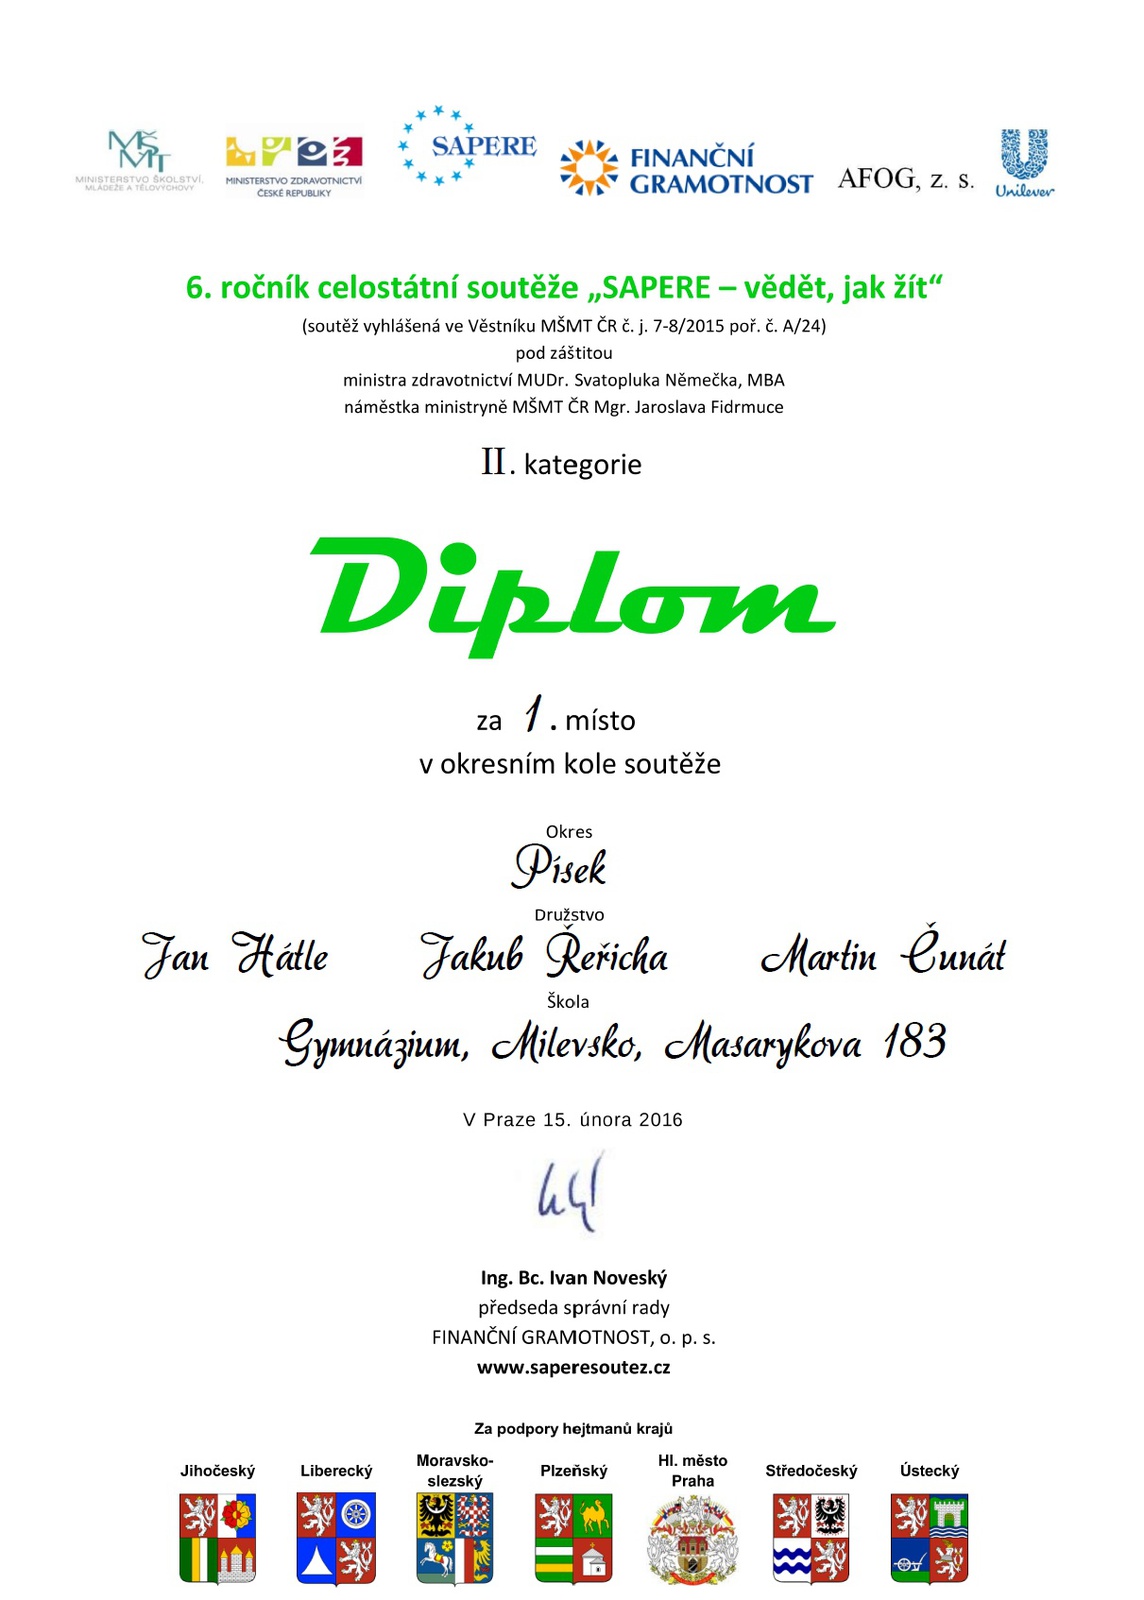 Diplom za II. kategorii